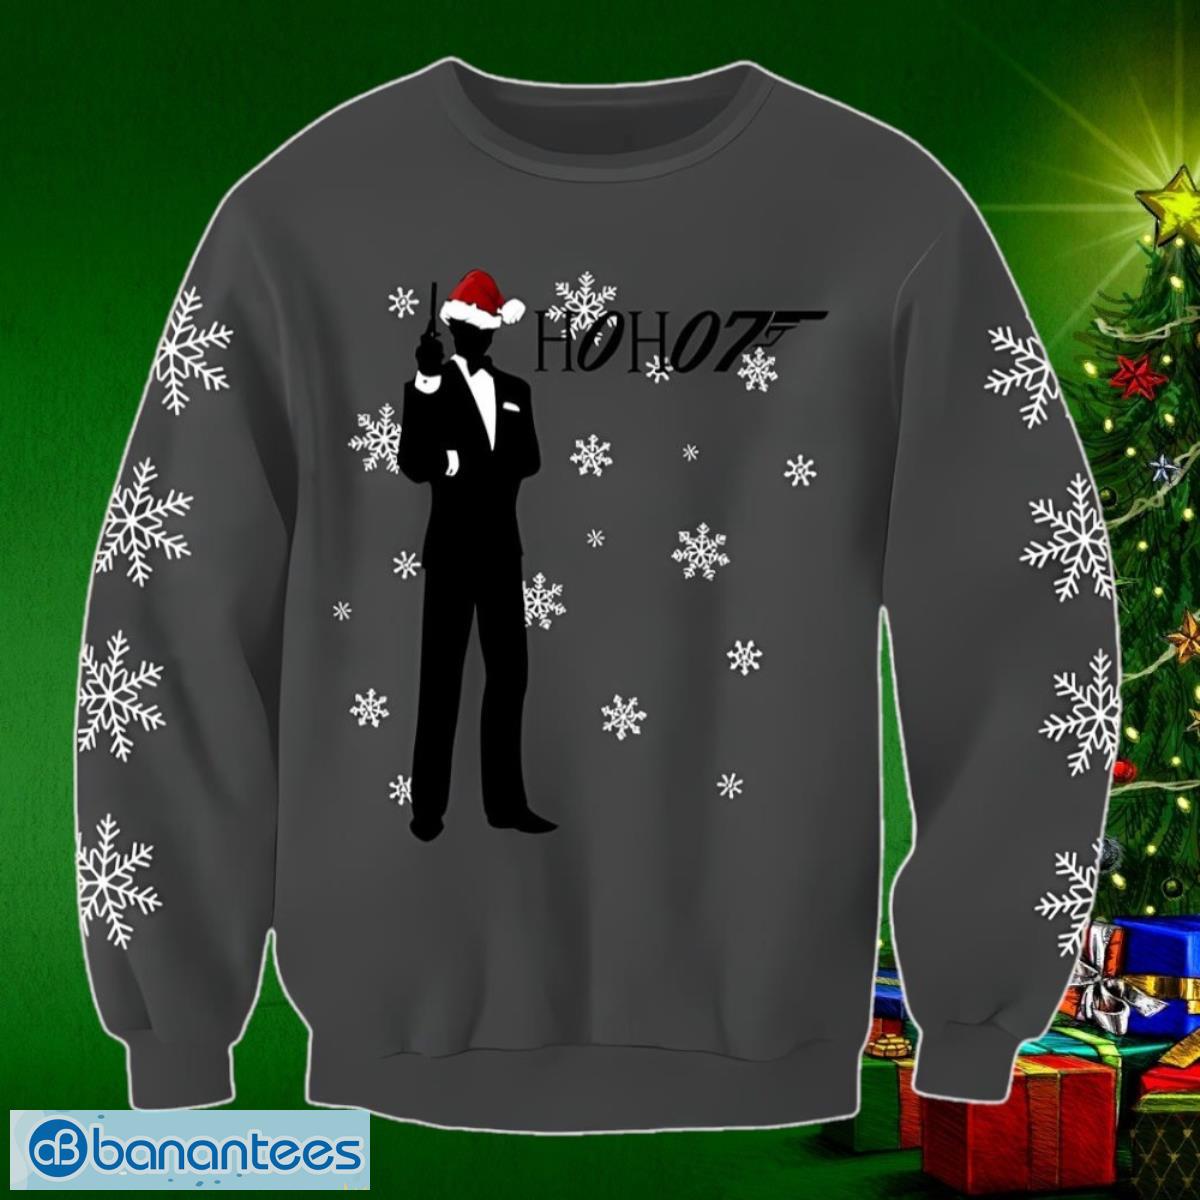 james-bond-007-movie-inspired-novelty-ugly-christmas-sweater-impressive-gift-for-all-of-you.jpg